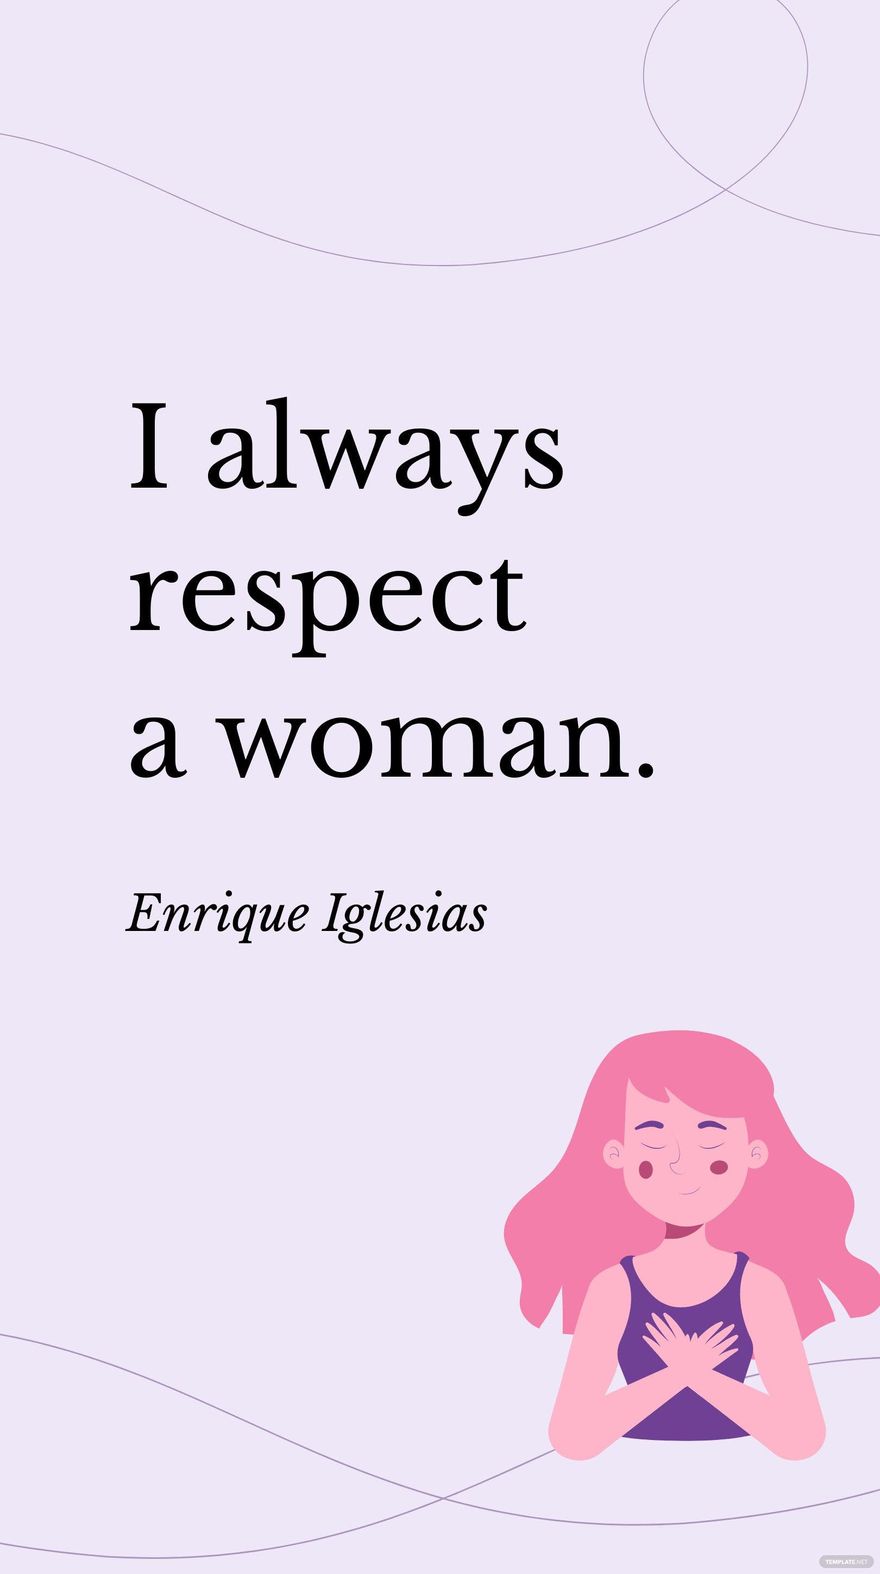 Enrique Iglesias - I always respect a woman. in JPG